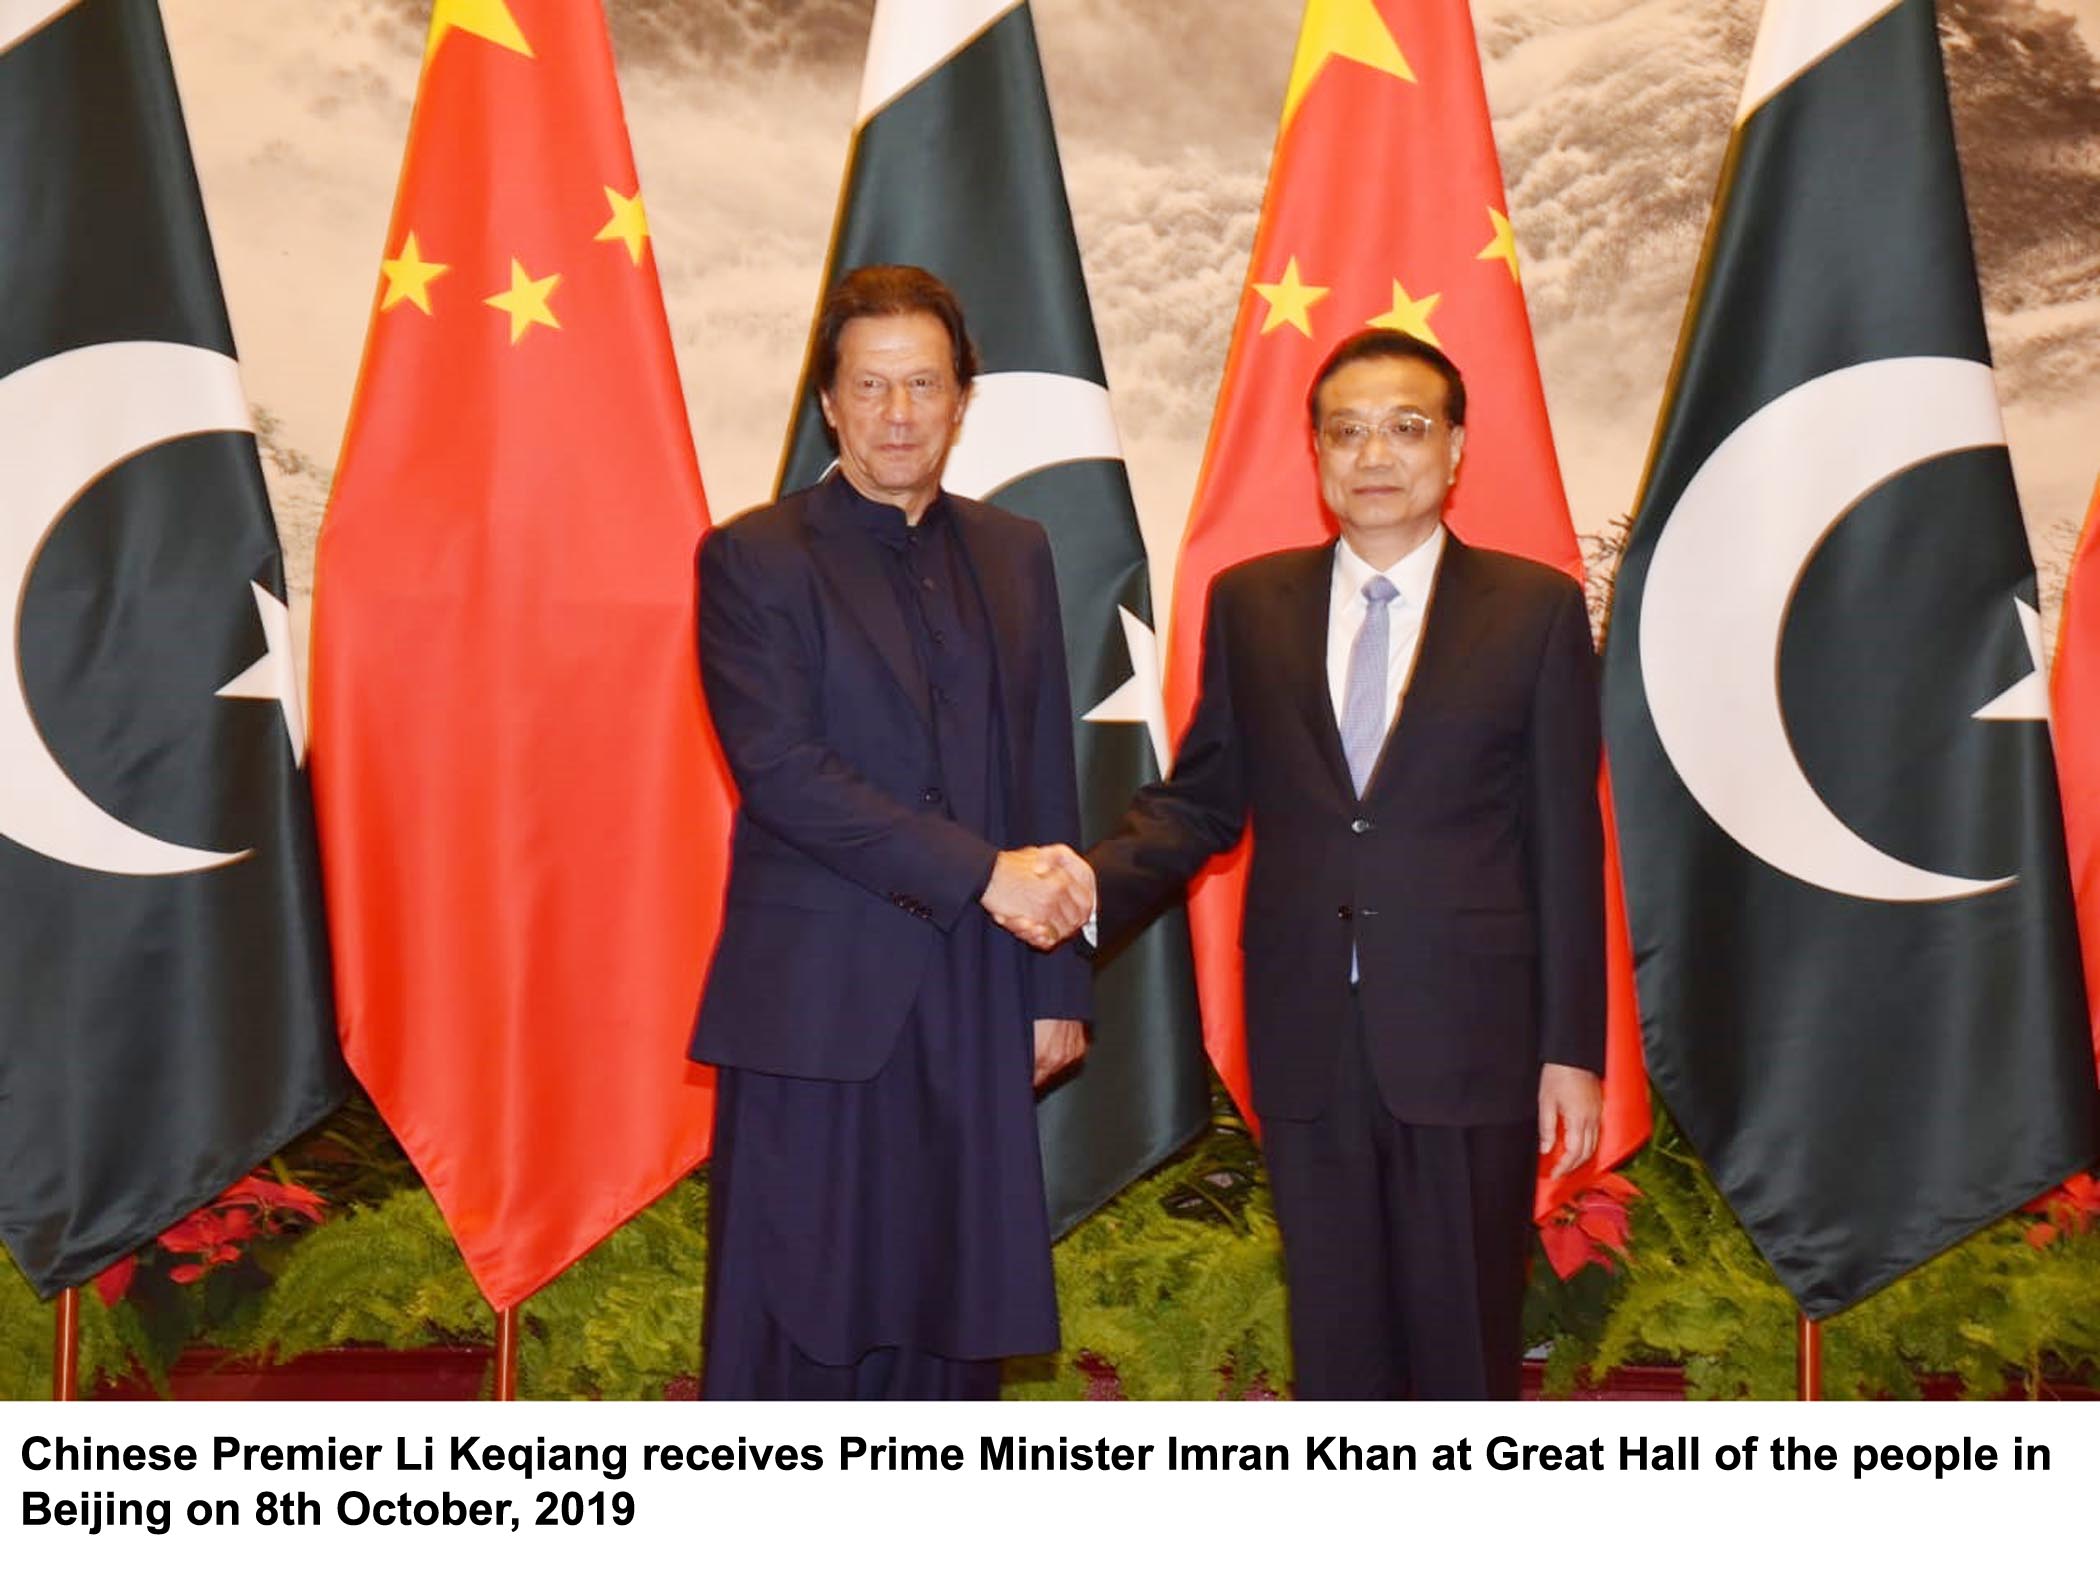 Prime Minister Imran Khan visit to China October 2019